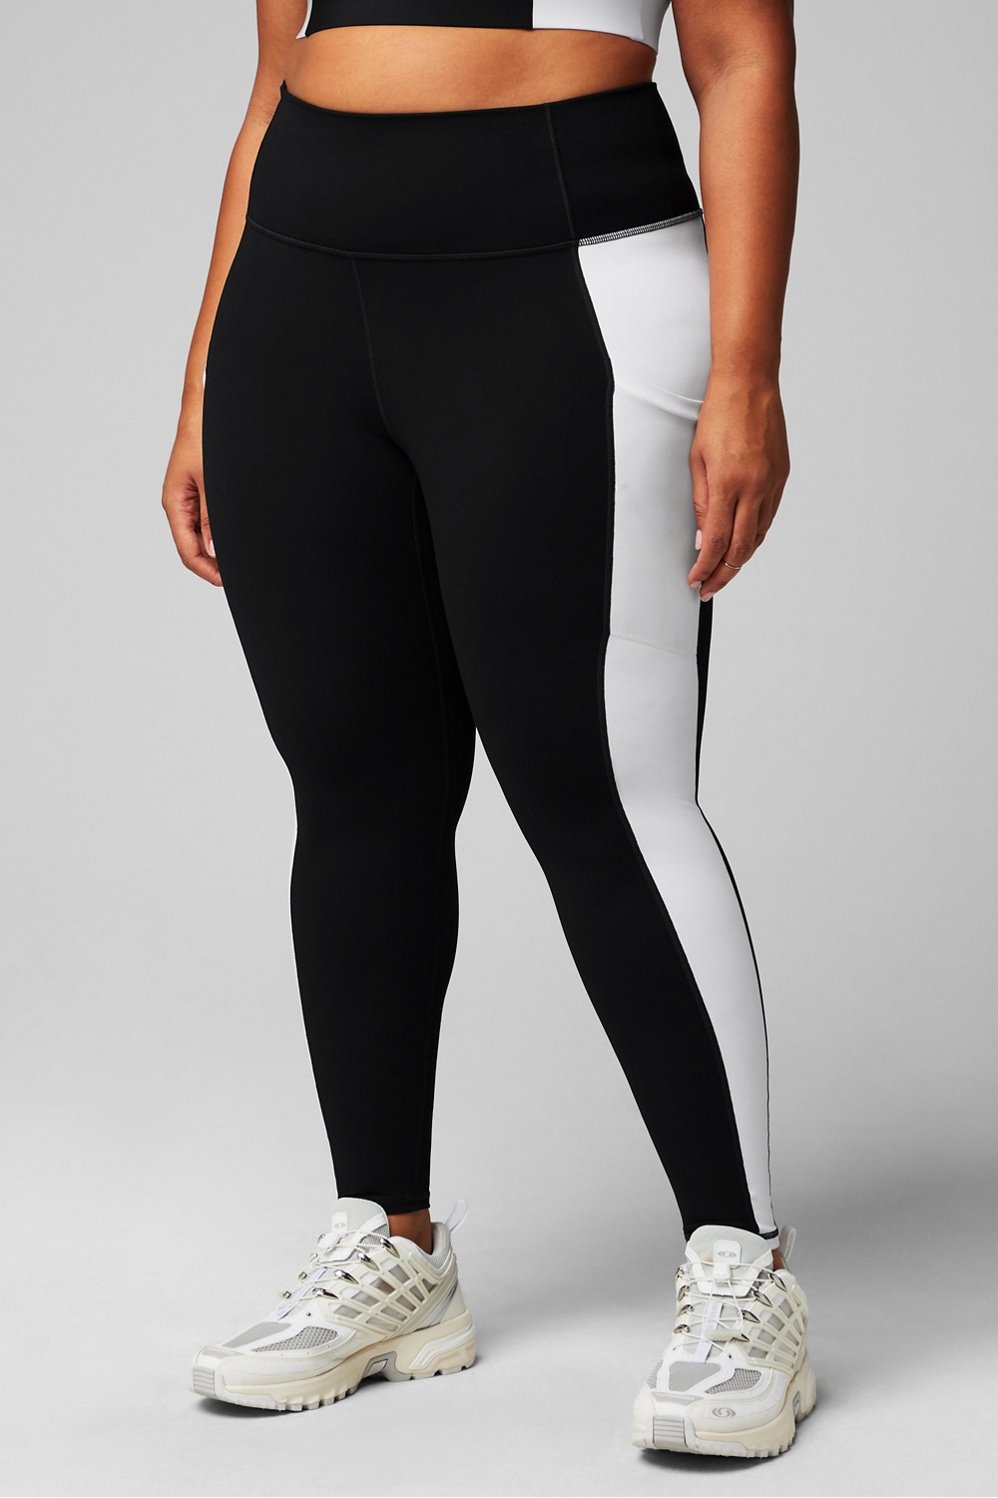 Fabletics, Pants & Jumpsuits, Fabletics Beckham Capri Powerhold Leggings  Black Size Small Active Pants Yoga S